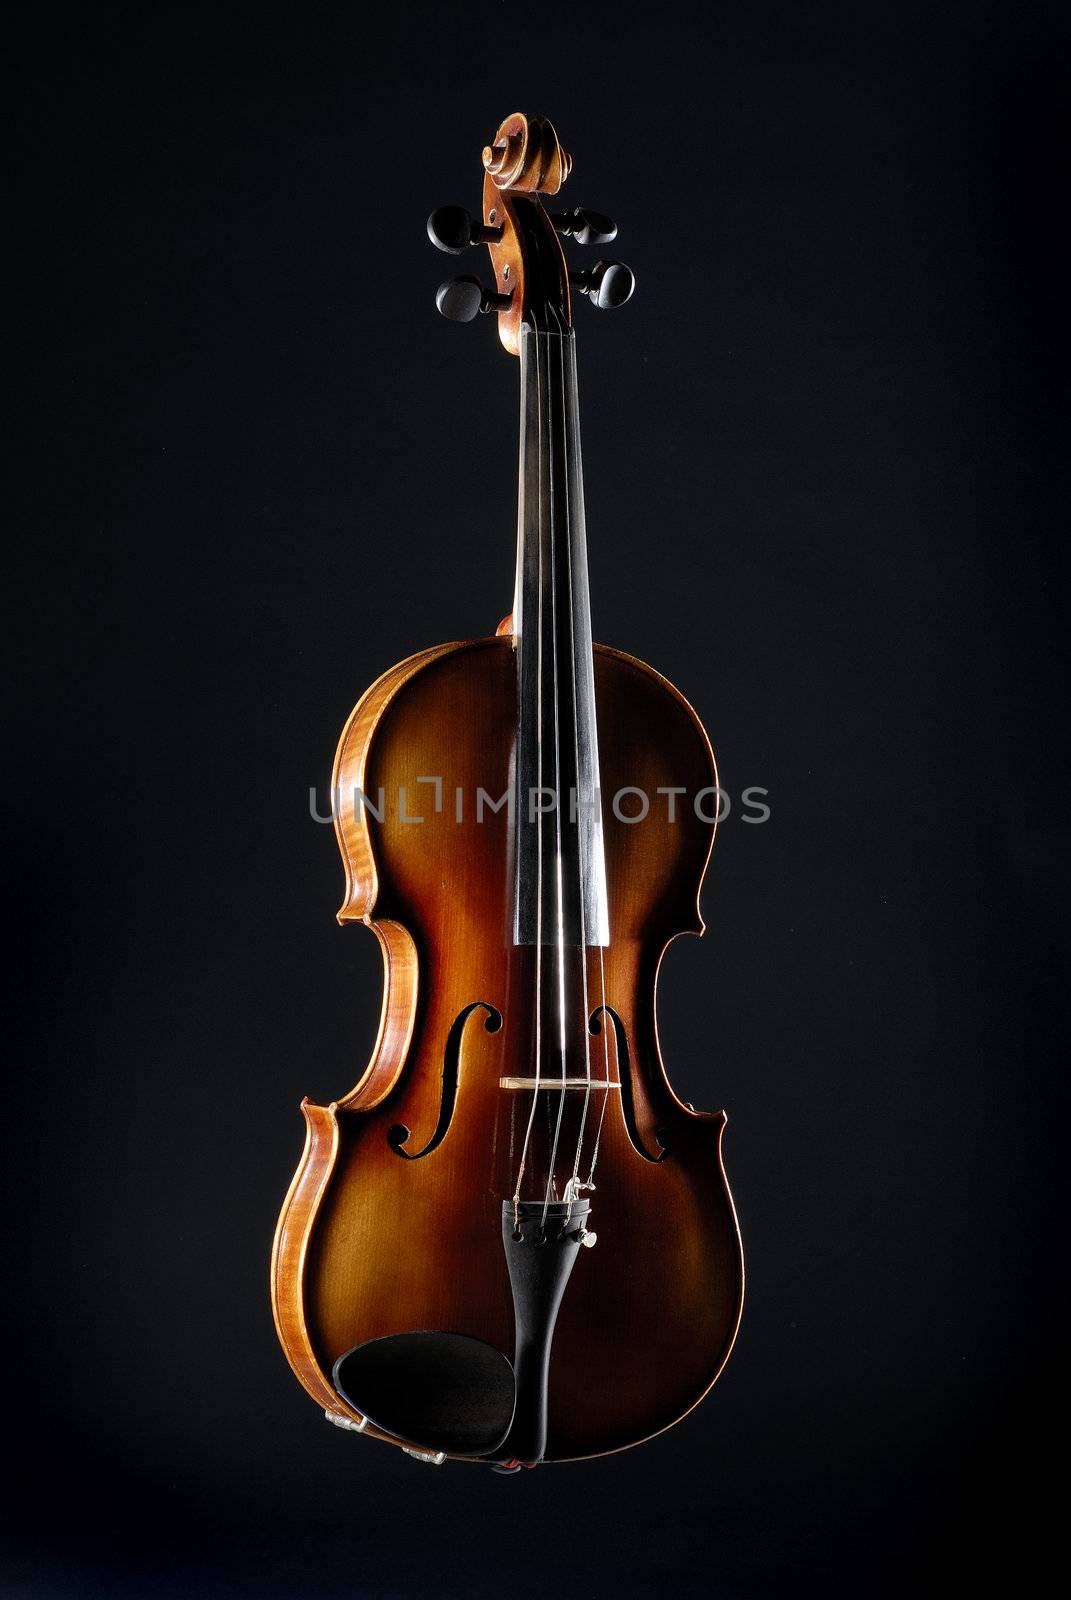 Violin on black velvet by f/2sumicron